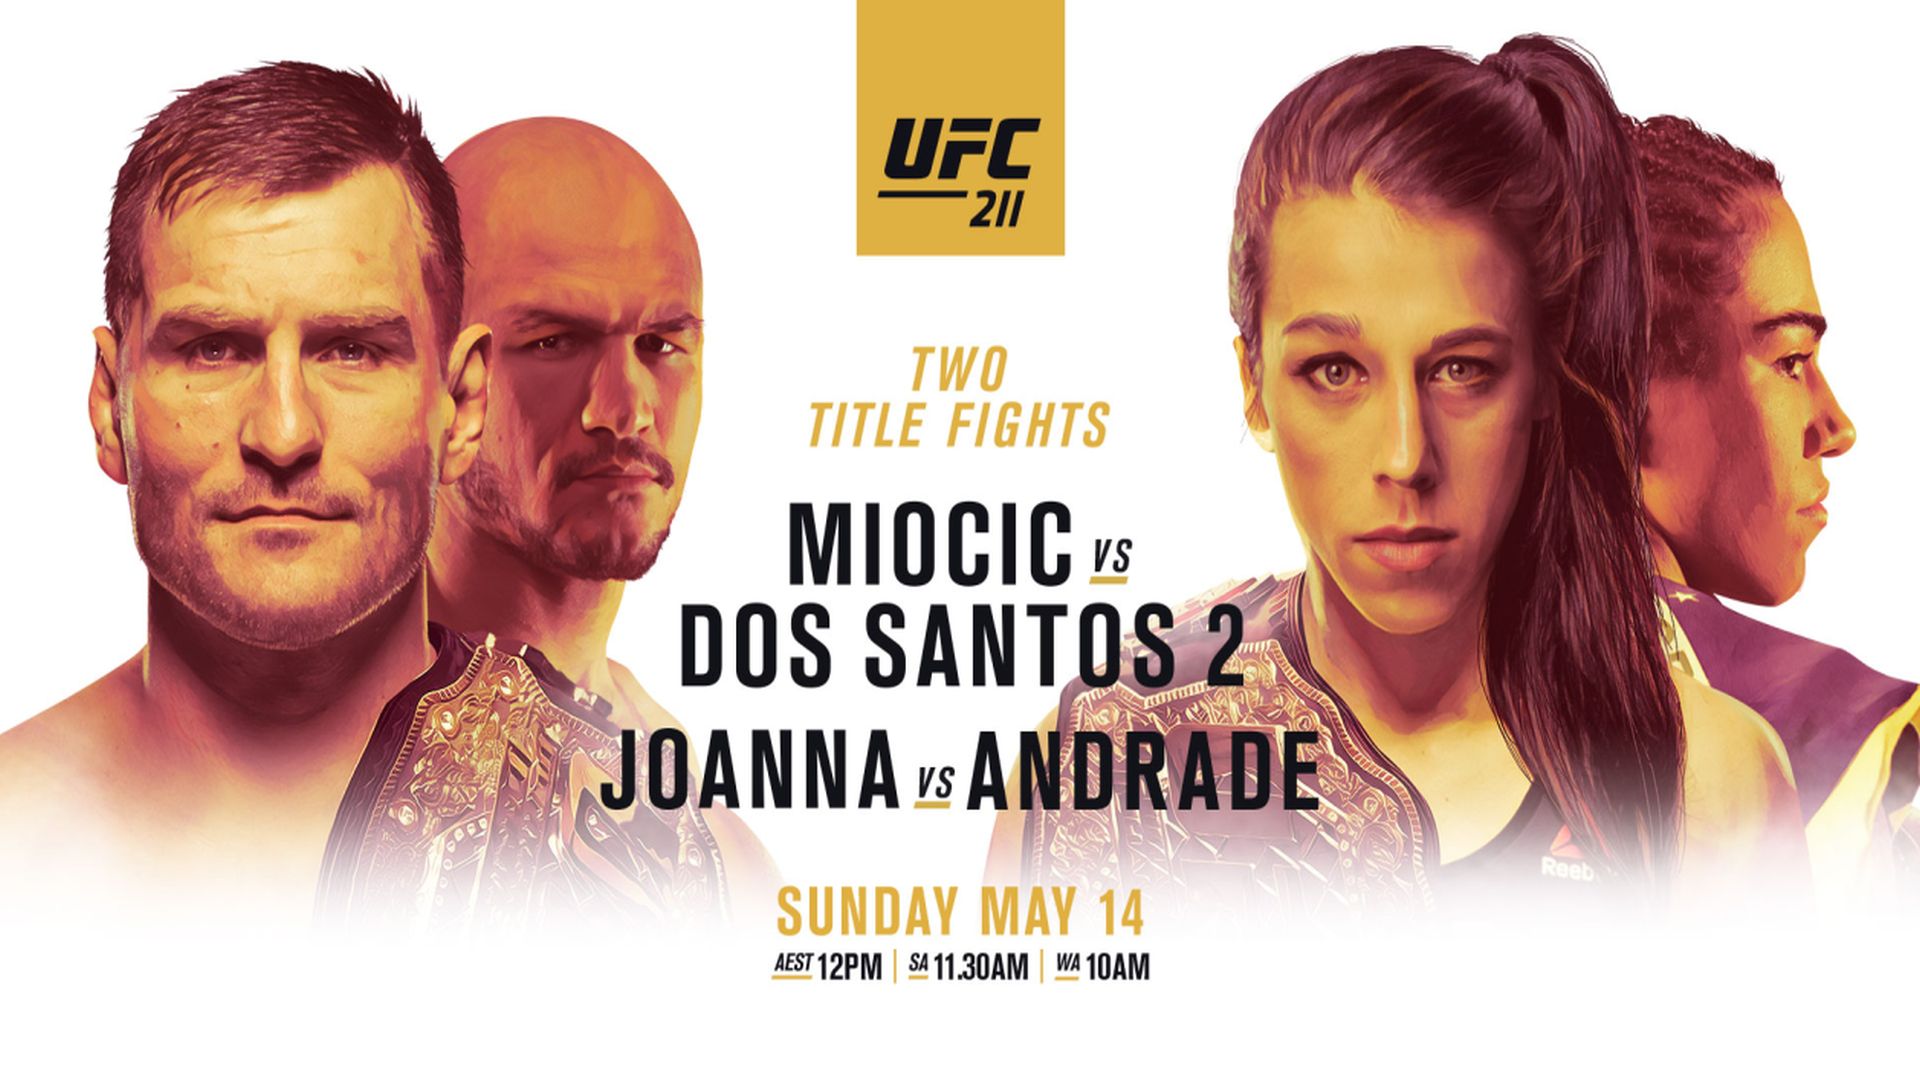 UFC 211: Miocic v.s JDS 2